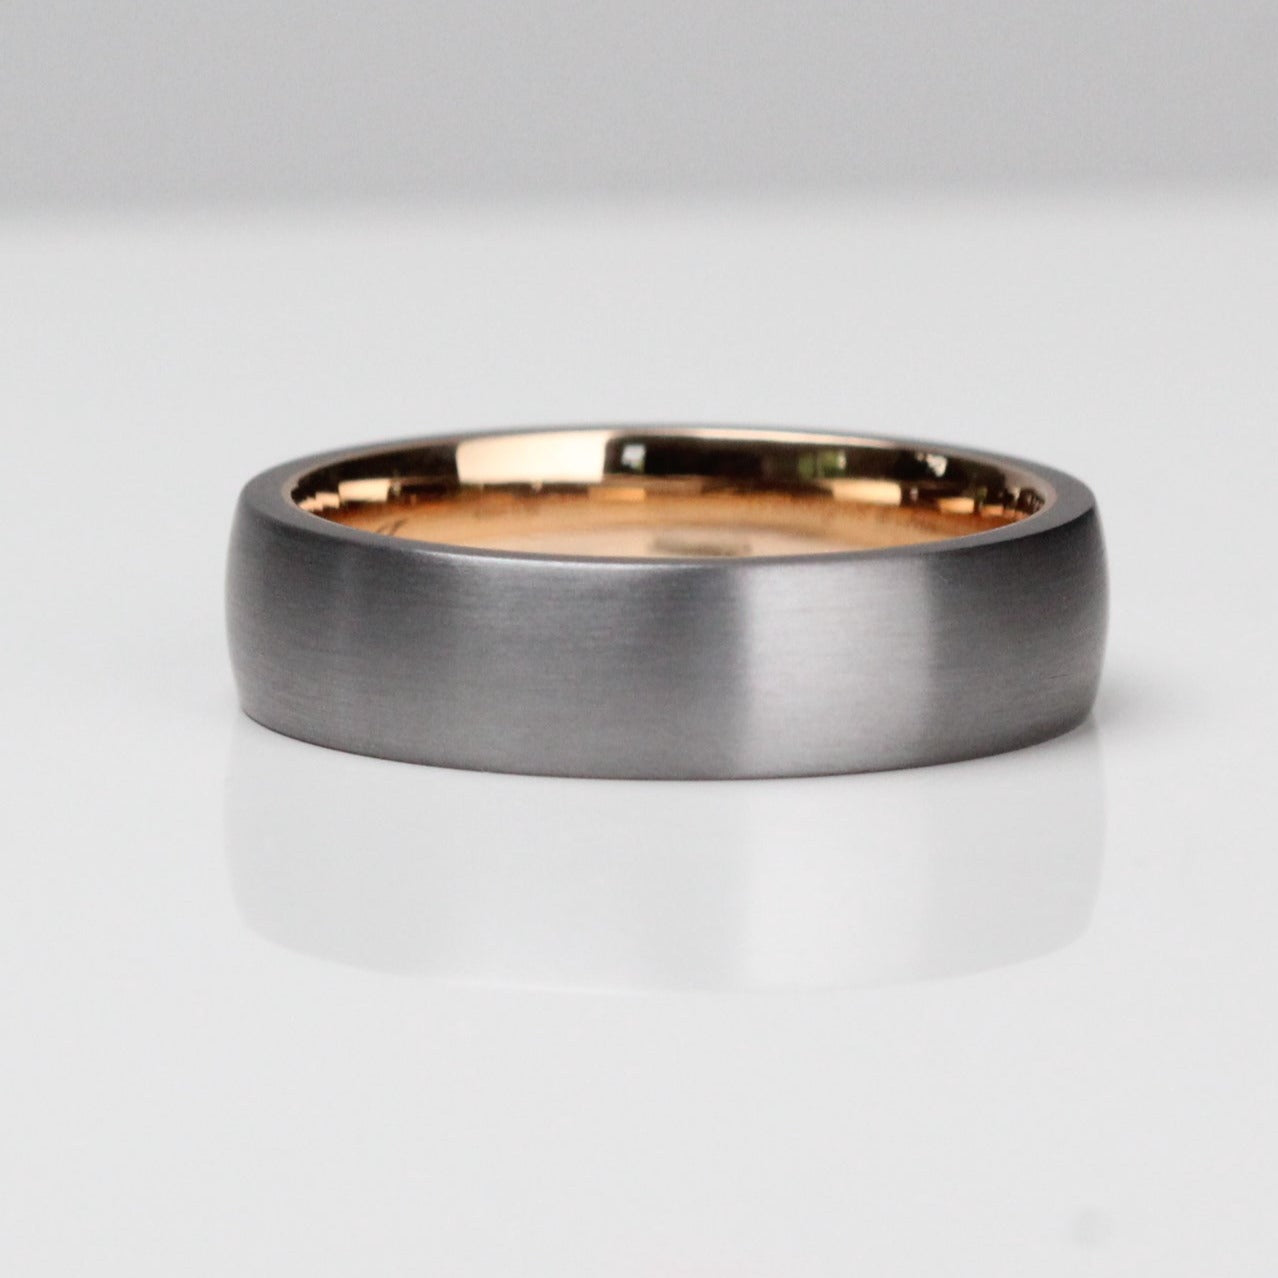 Tantalum wedding ring with a 14 karat rose gold liner. Comfort fit mens wedding band